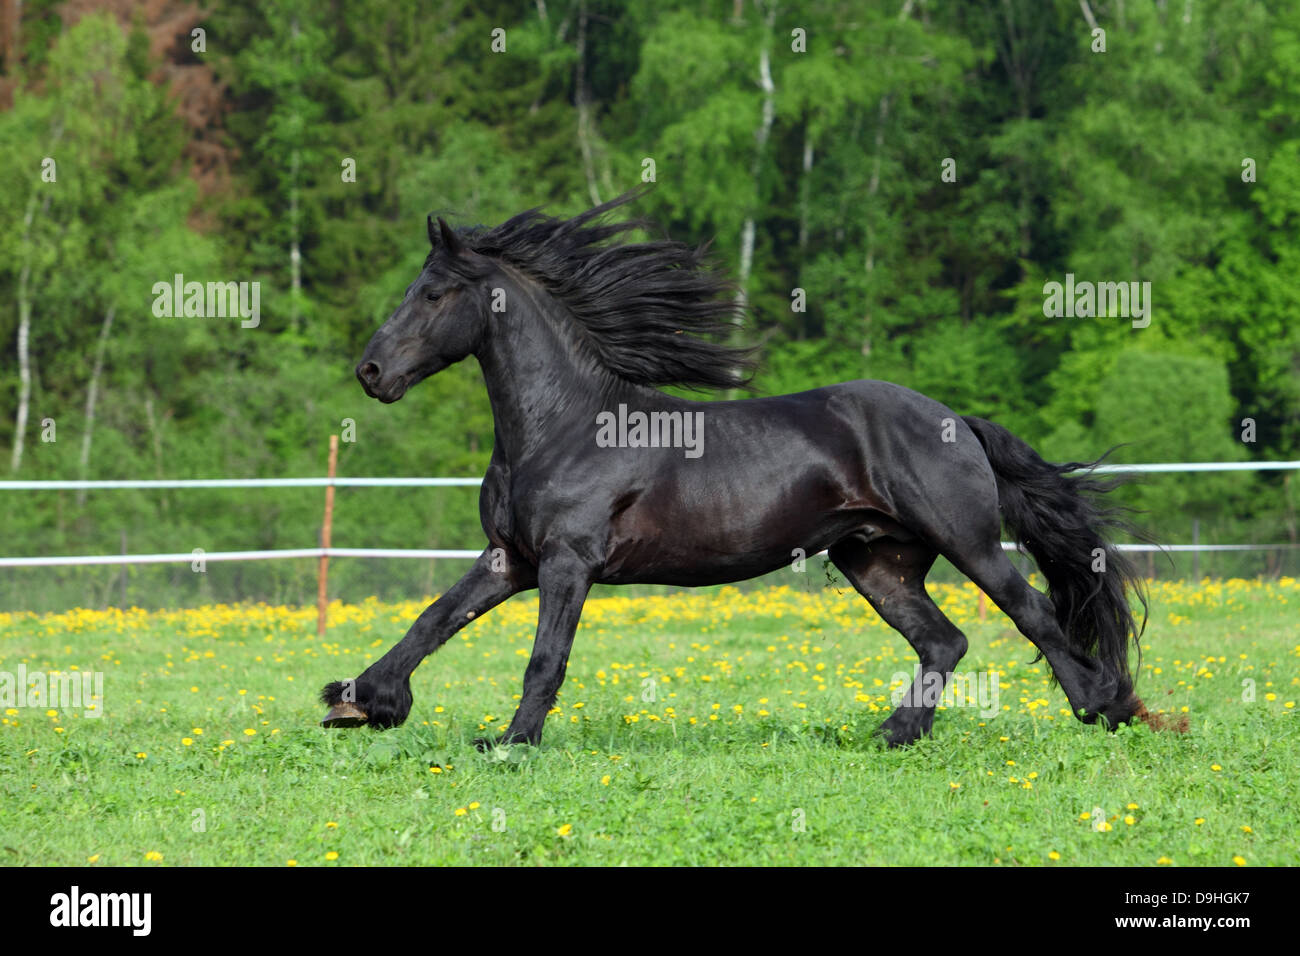 Black Friesian horse gallop in a green field Stock Photo